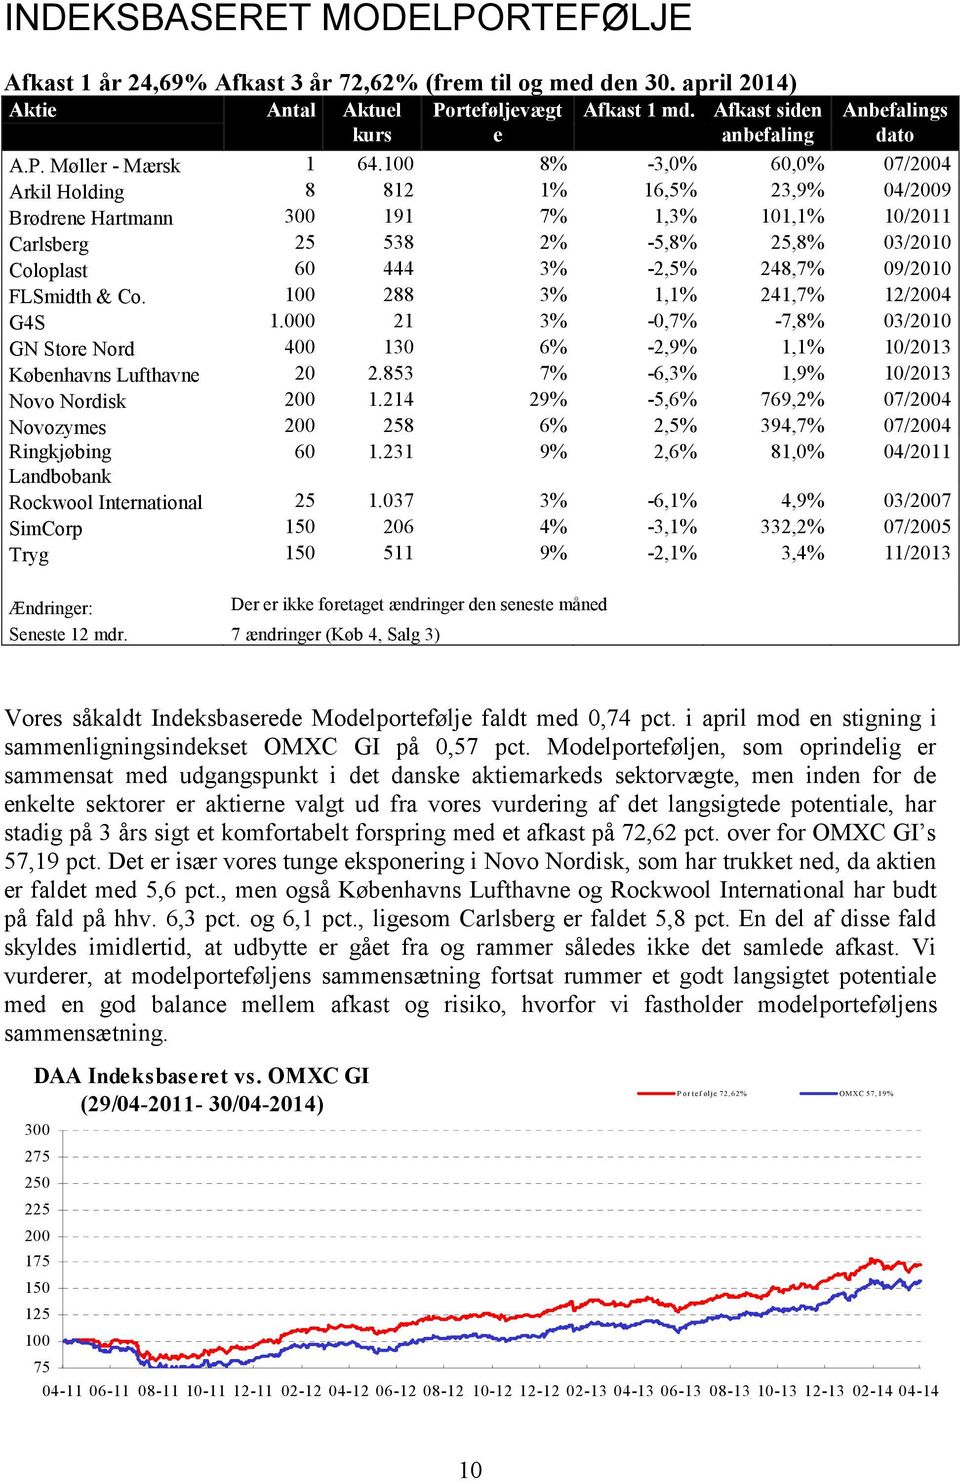 100 8% 3, 60, 07/2004 Arkil Holding 8 812 1% 16,5% 23,9% 04/2009 Brødrene Hartmann 300 191 7% 1,3% 101,1% 10/2011 Carlsberg 25 538 2% 5,8% 25,8% 03/2010 Coloplast 60 444 3% 2,5% 248,7% 09/2010